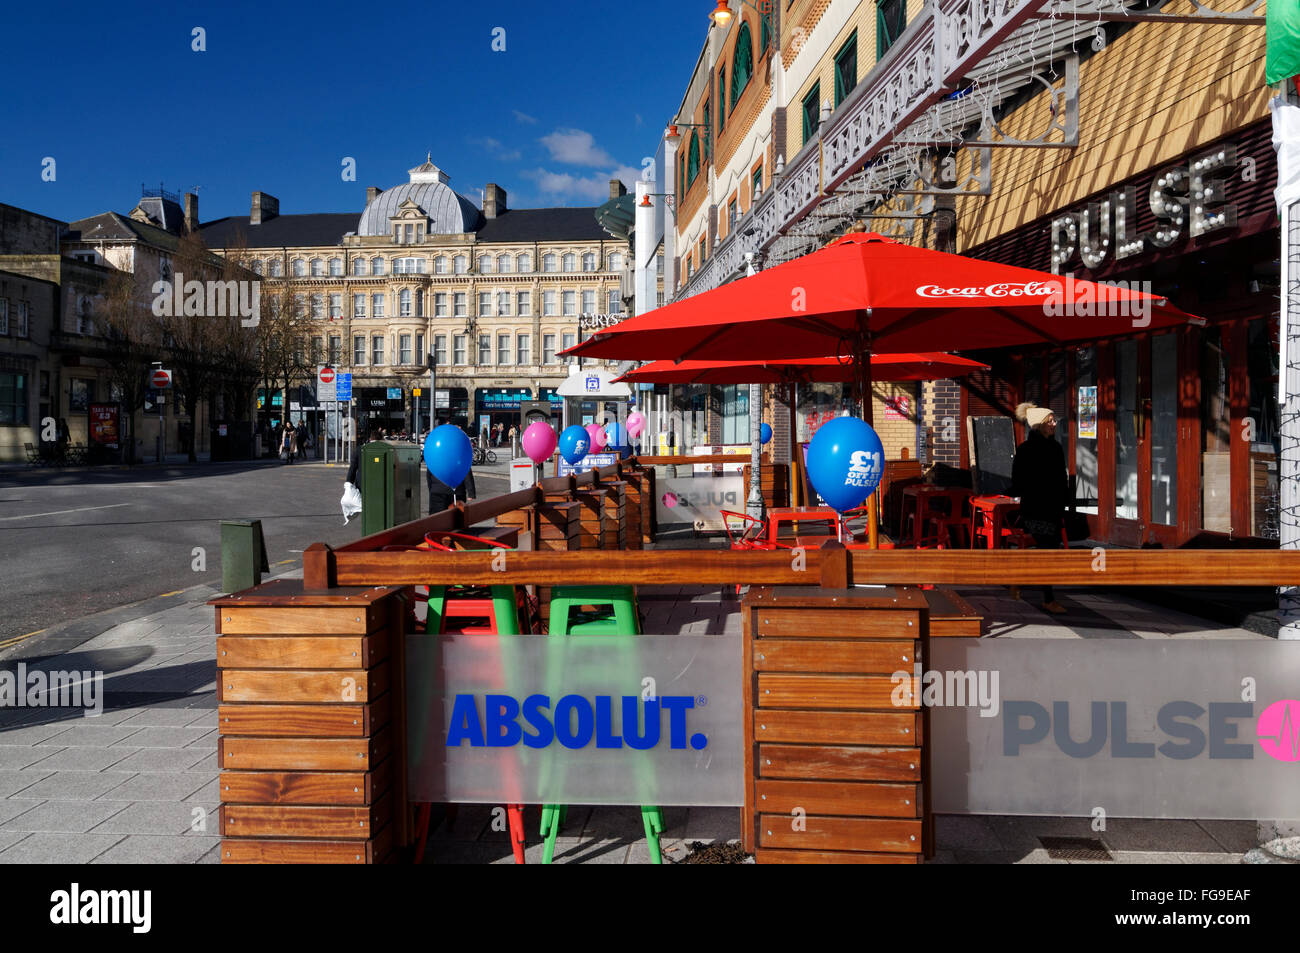 Pulse Street bar on pavement, Churchill Way, Cardiff city centre, Cardiff, Wales, UK. Stock Photo